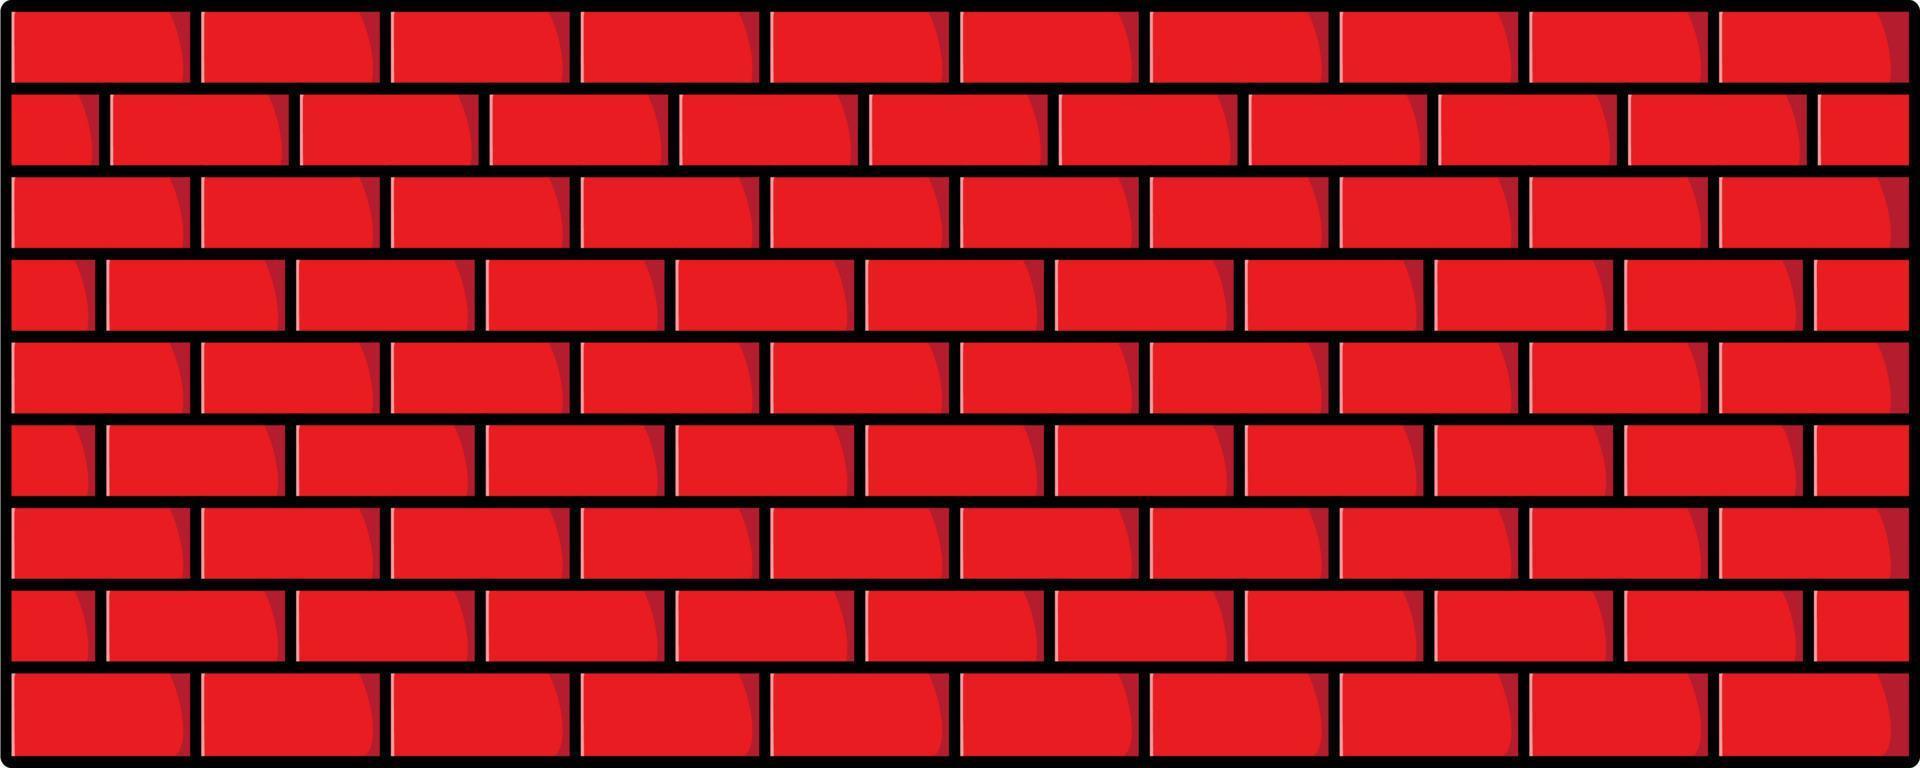 red brick texture background vector